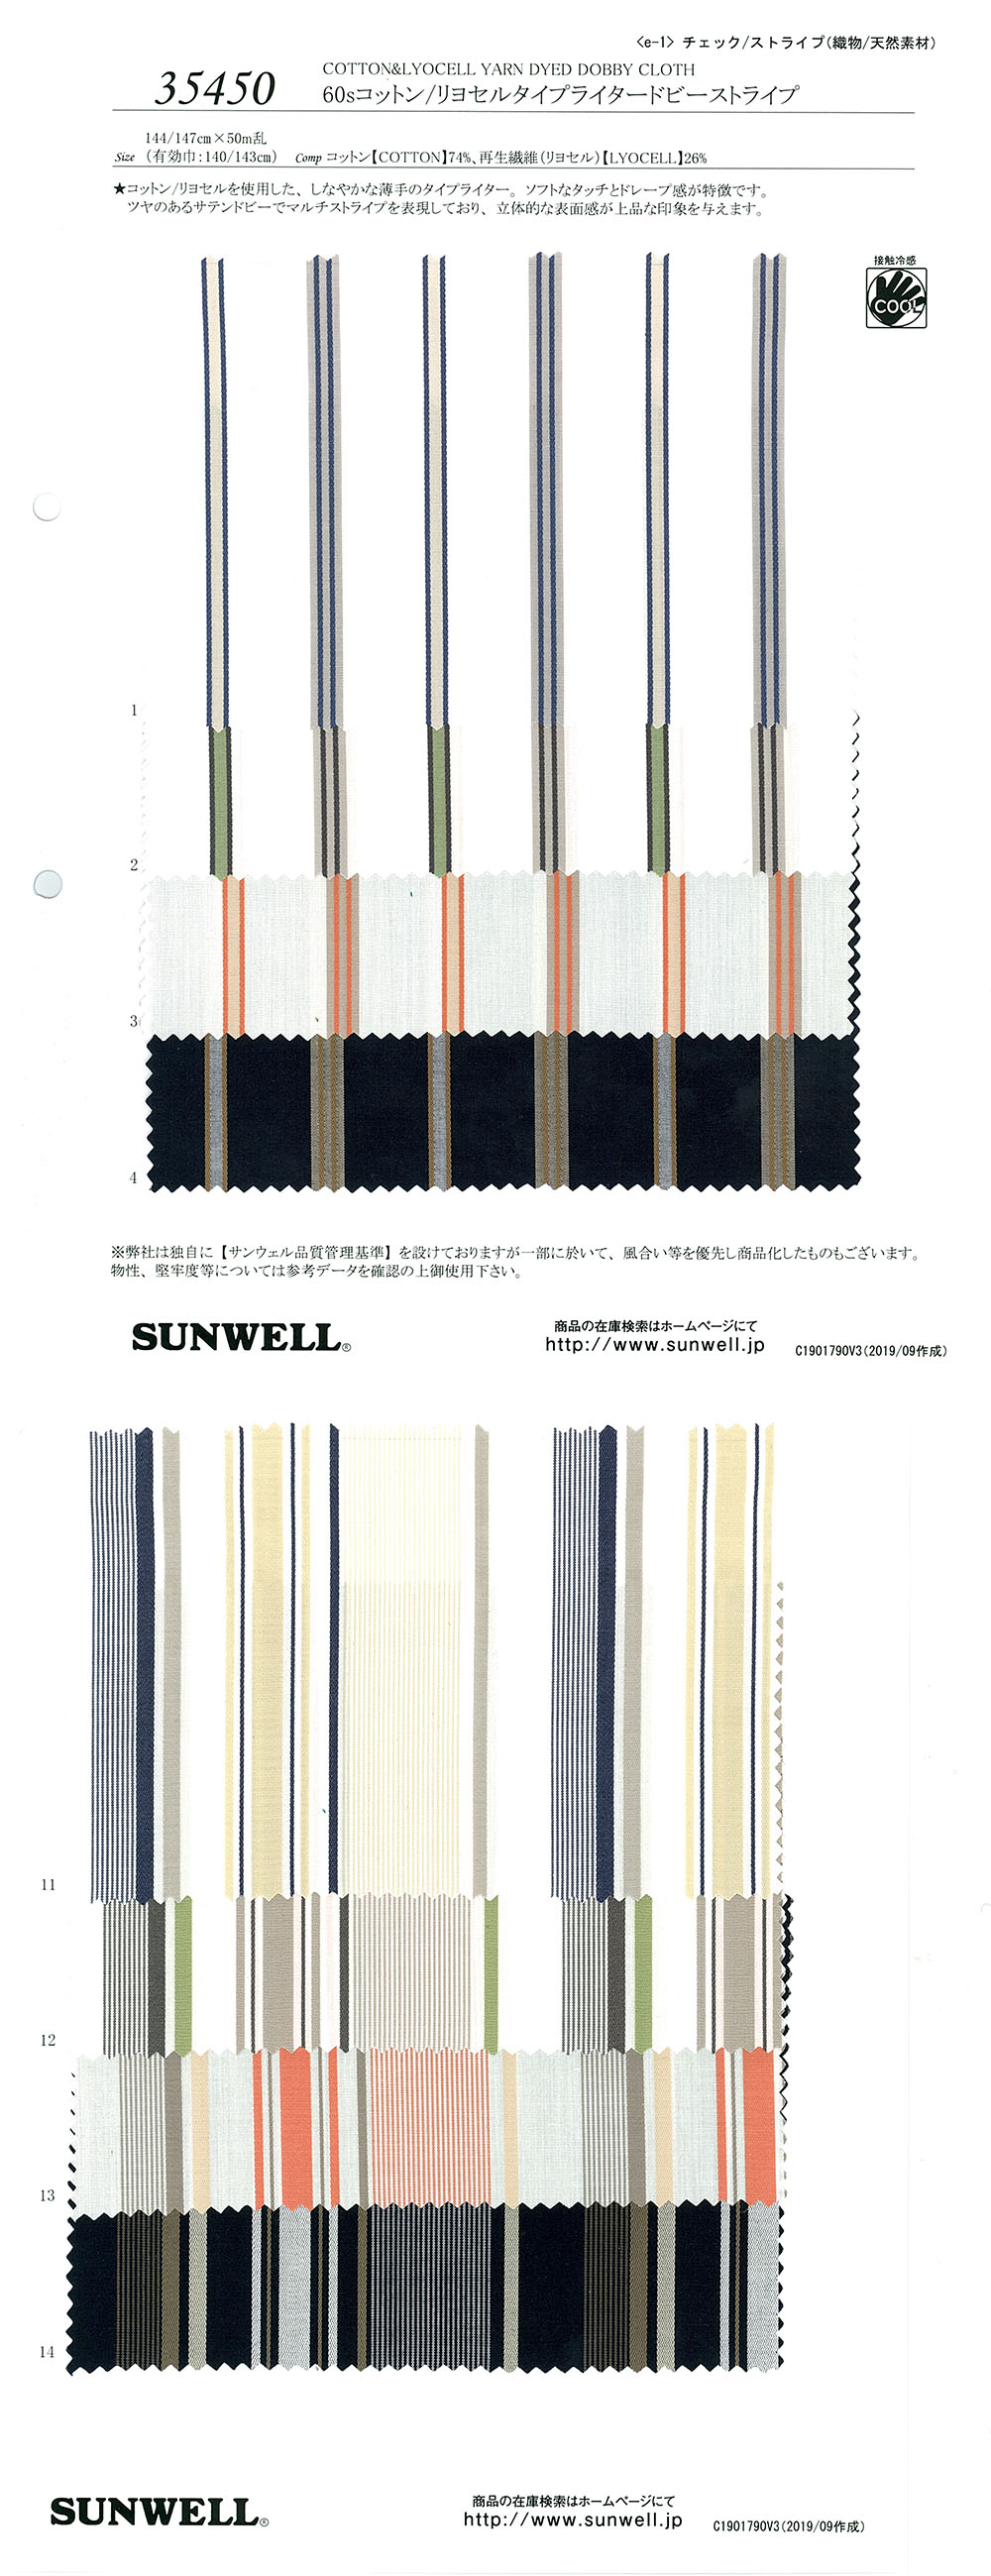 35450 60 Single Thread Cotton/Cellulose Typewritter Cloth Dobby Stripe[Textile / Fabric] SUNWELL